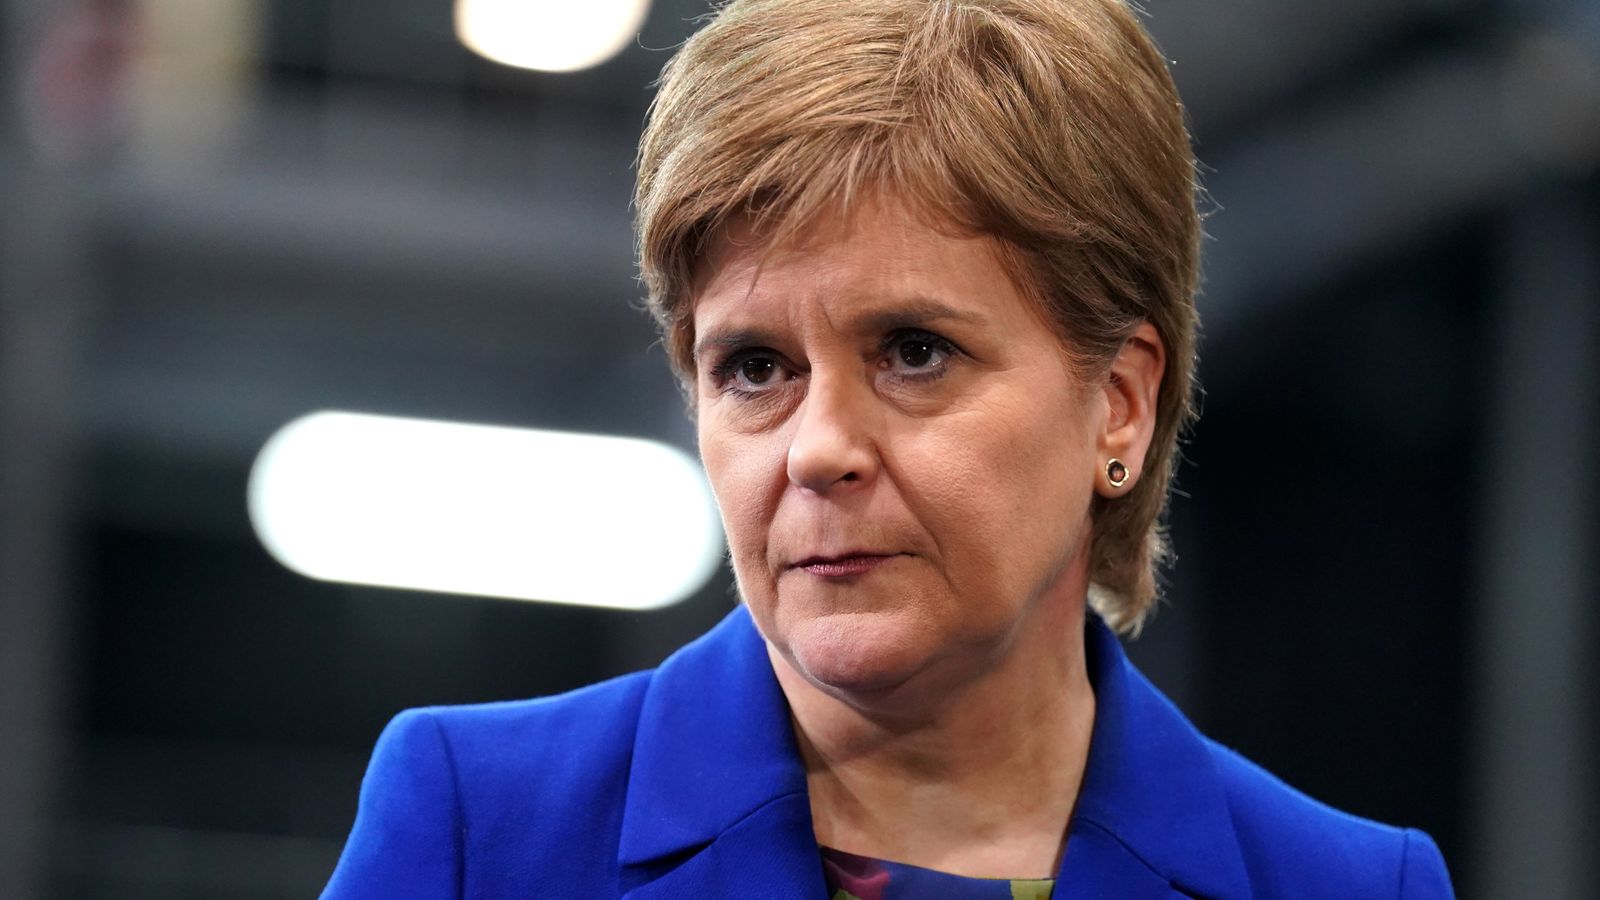 Nicola Sturgeon set to resign as Scotland's first minister, senior source tells Sky News